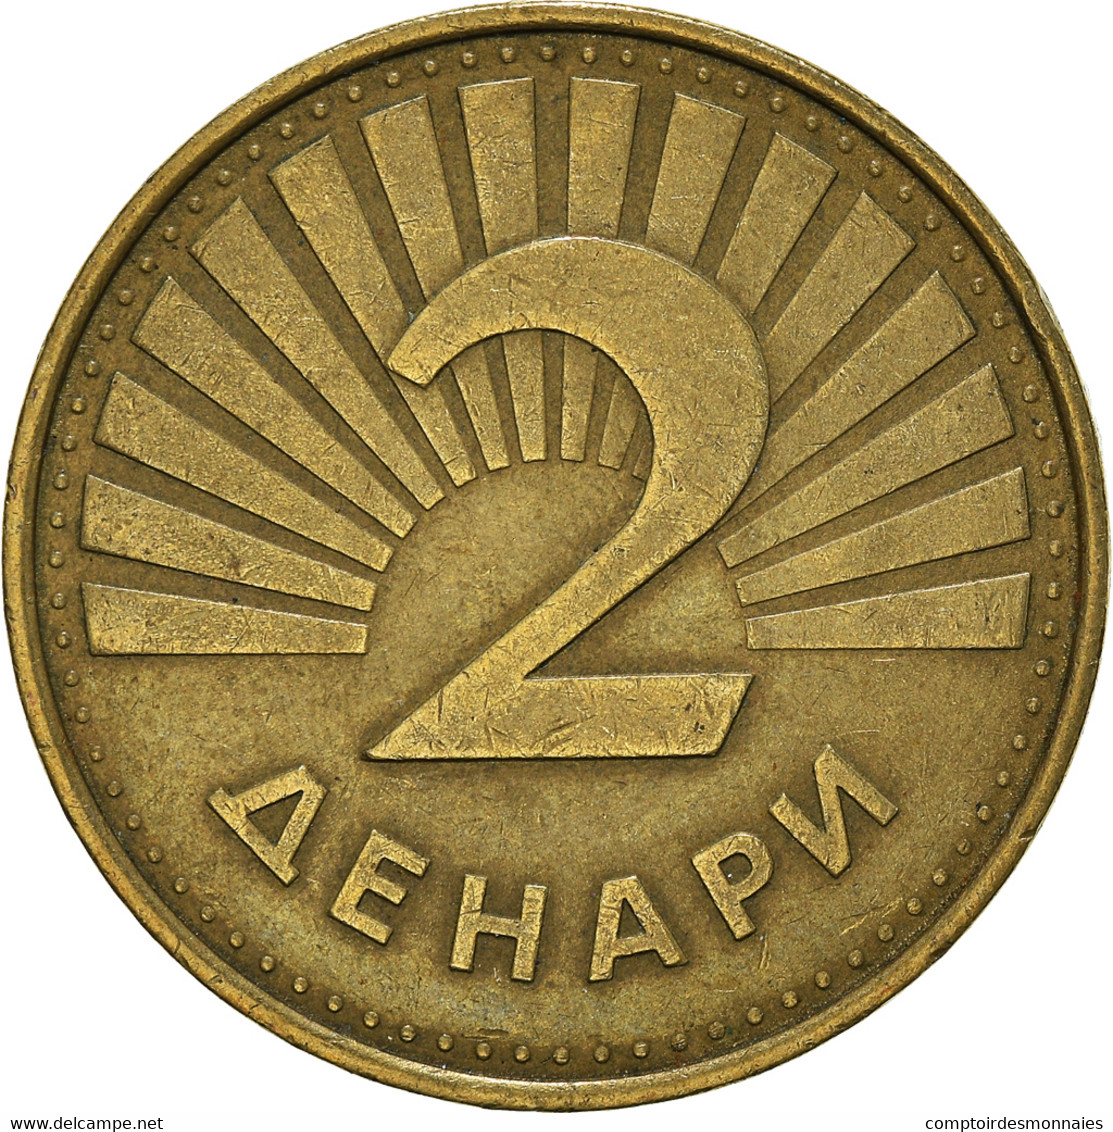 Monnaie, Macédoine, 2 Denari, 2001 - Nordmazedonien